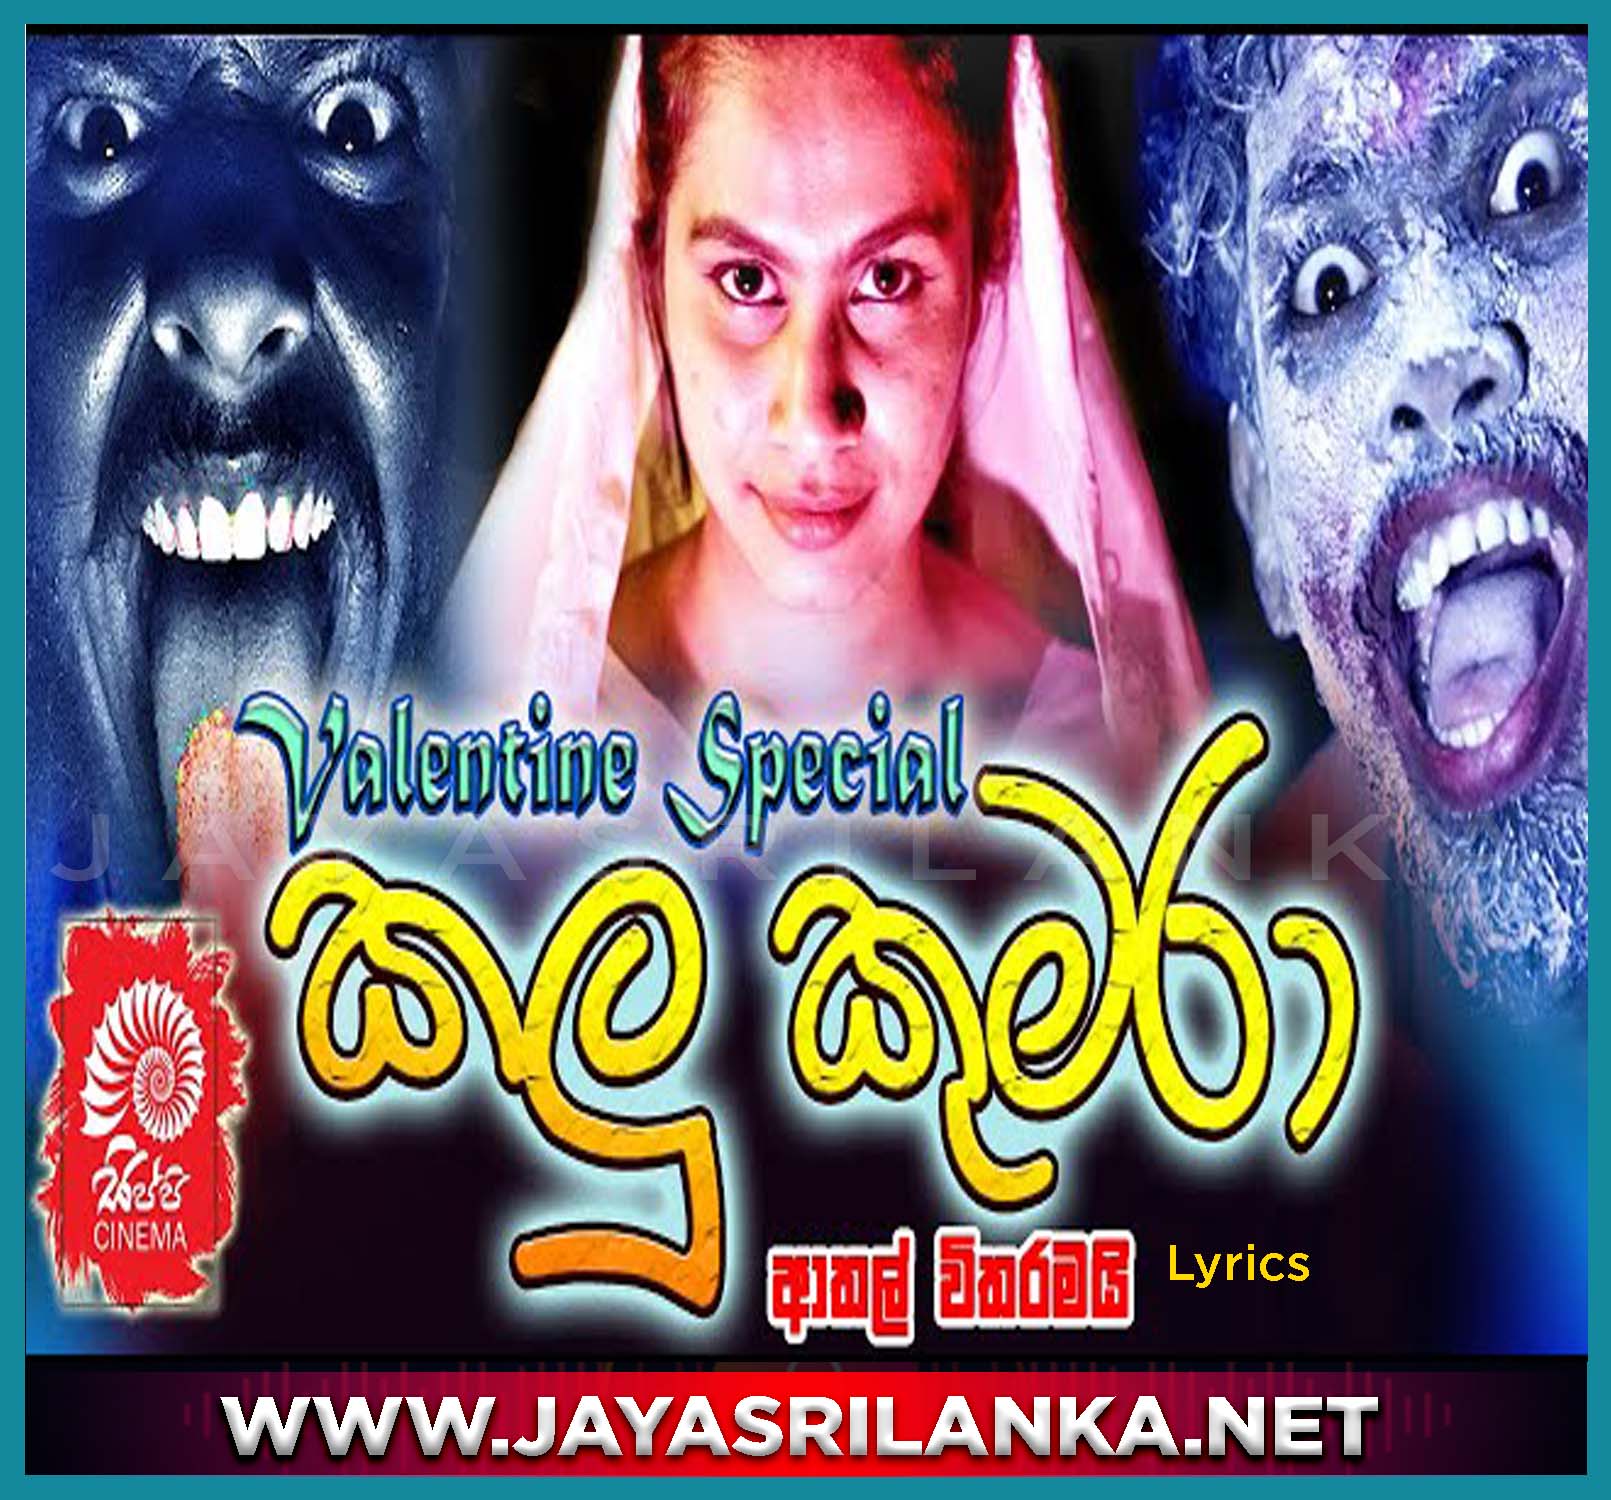 Kalu Kumara (Valentine Special Tharu Kumara Parody Version)